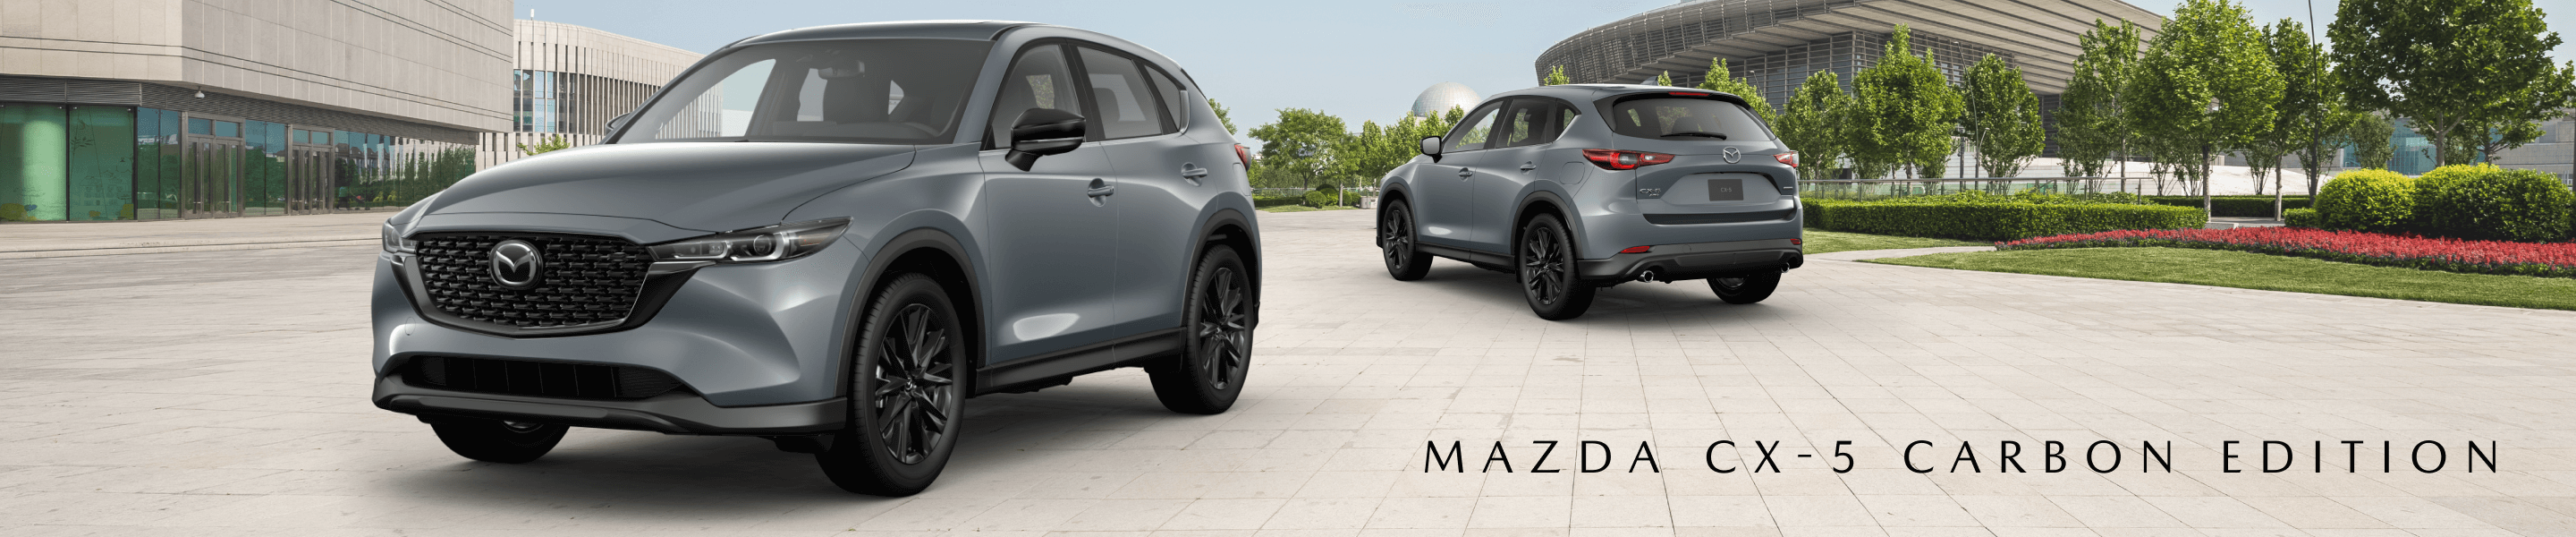 Mazda CX5 Carbon Edition Review & Specs